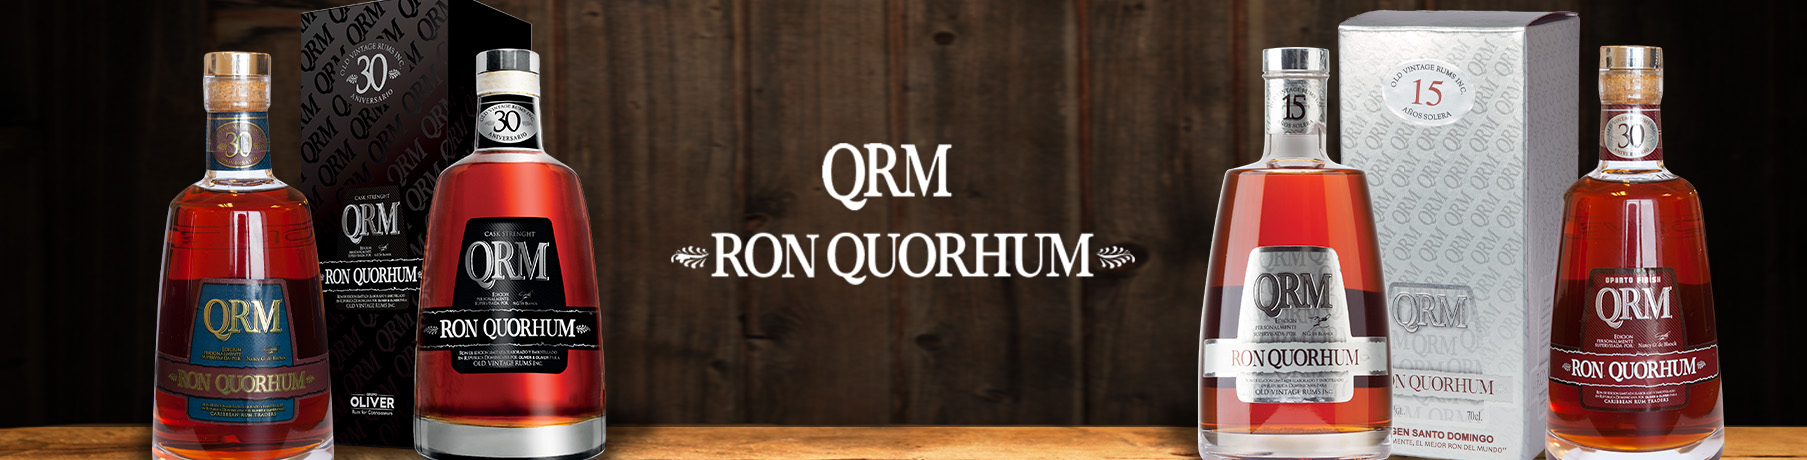 Rumy Quorhum